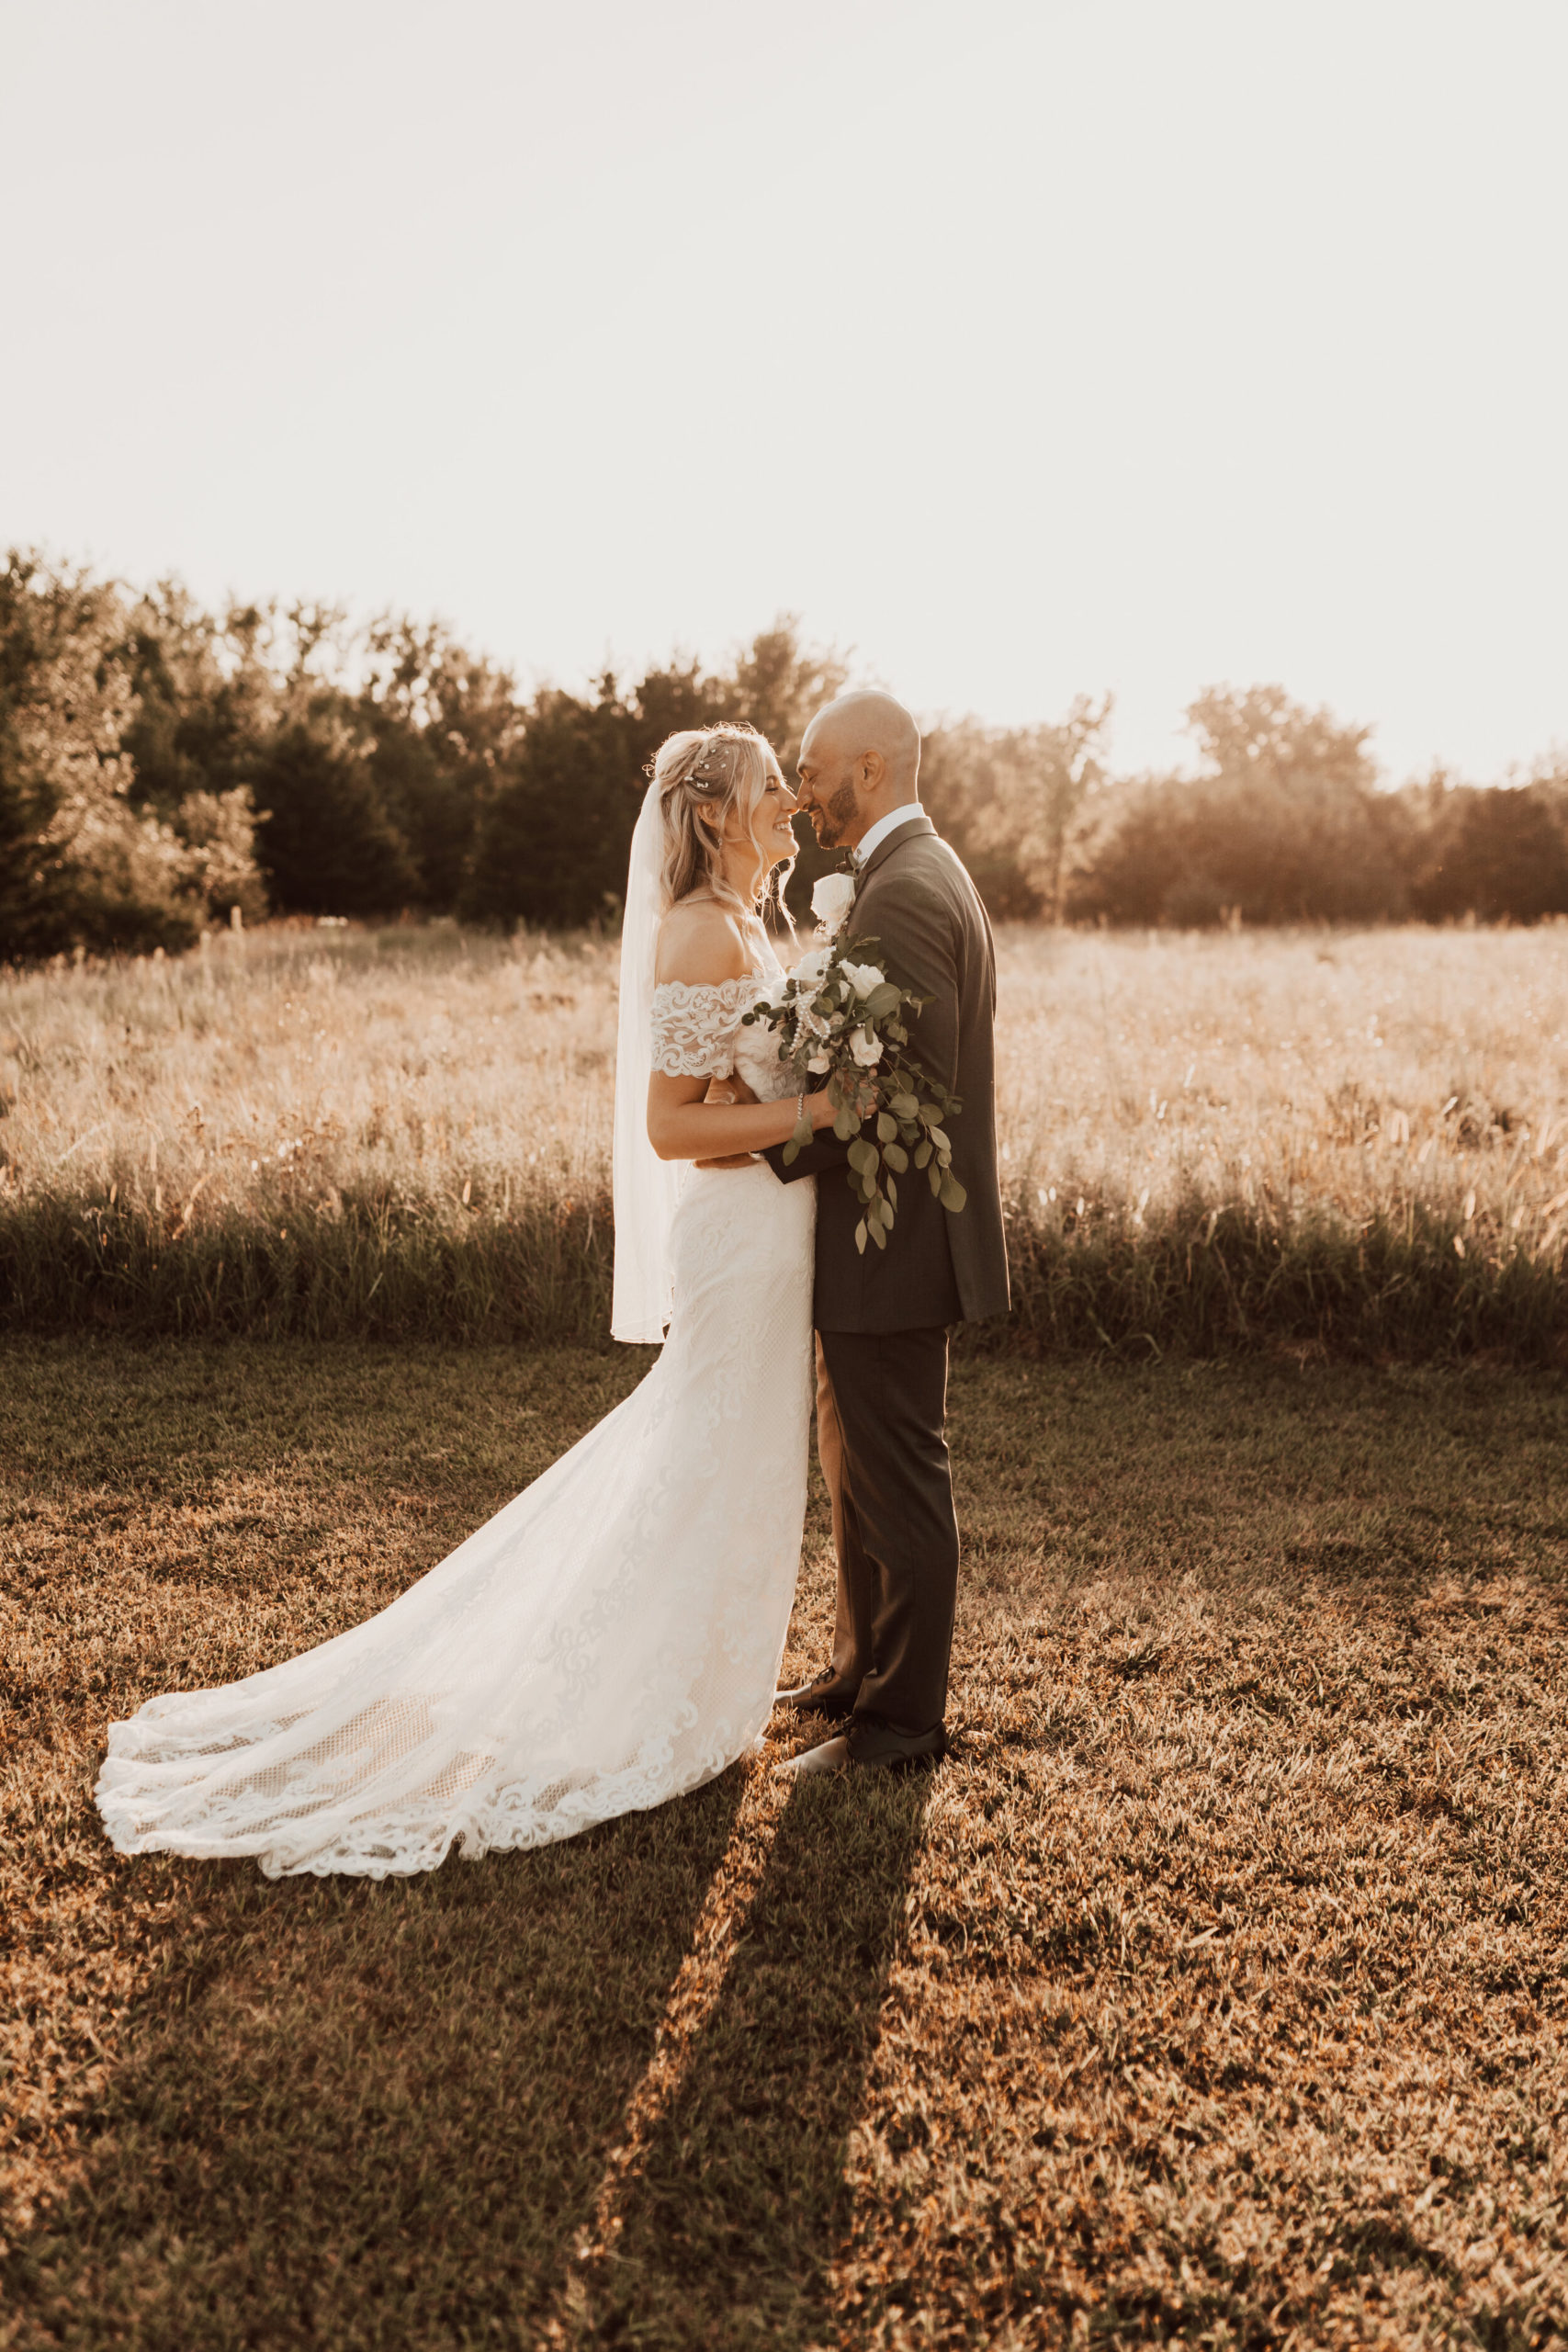 Hayley + Lorenzo - Summer White Chapel Wedding at Stone Hill Barn in Augusta, Kansas180.jpg